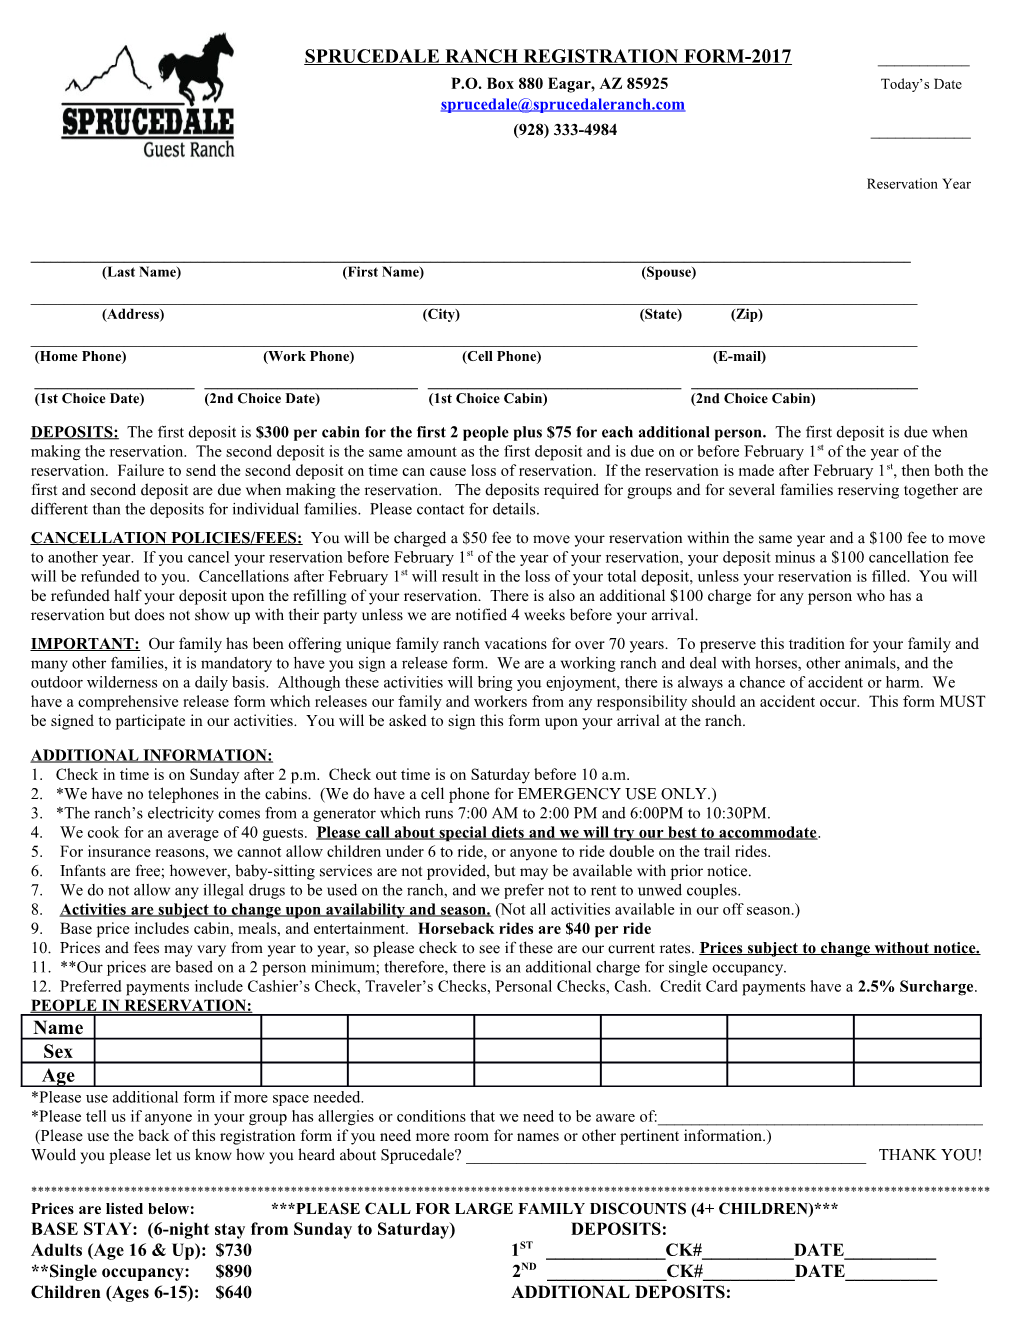 Sprucedale Ranch Registration Form 2007